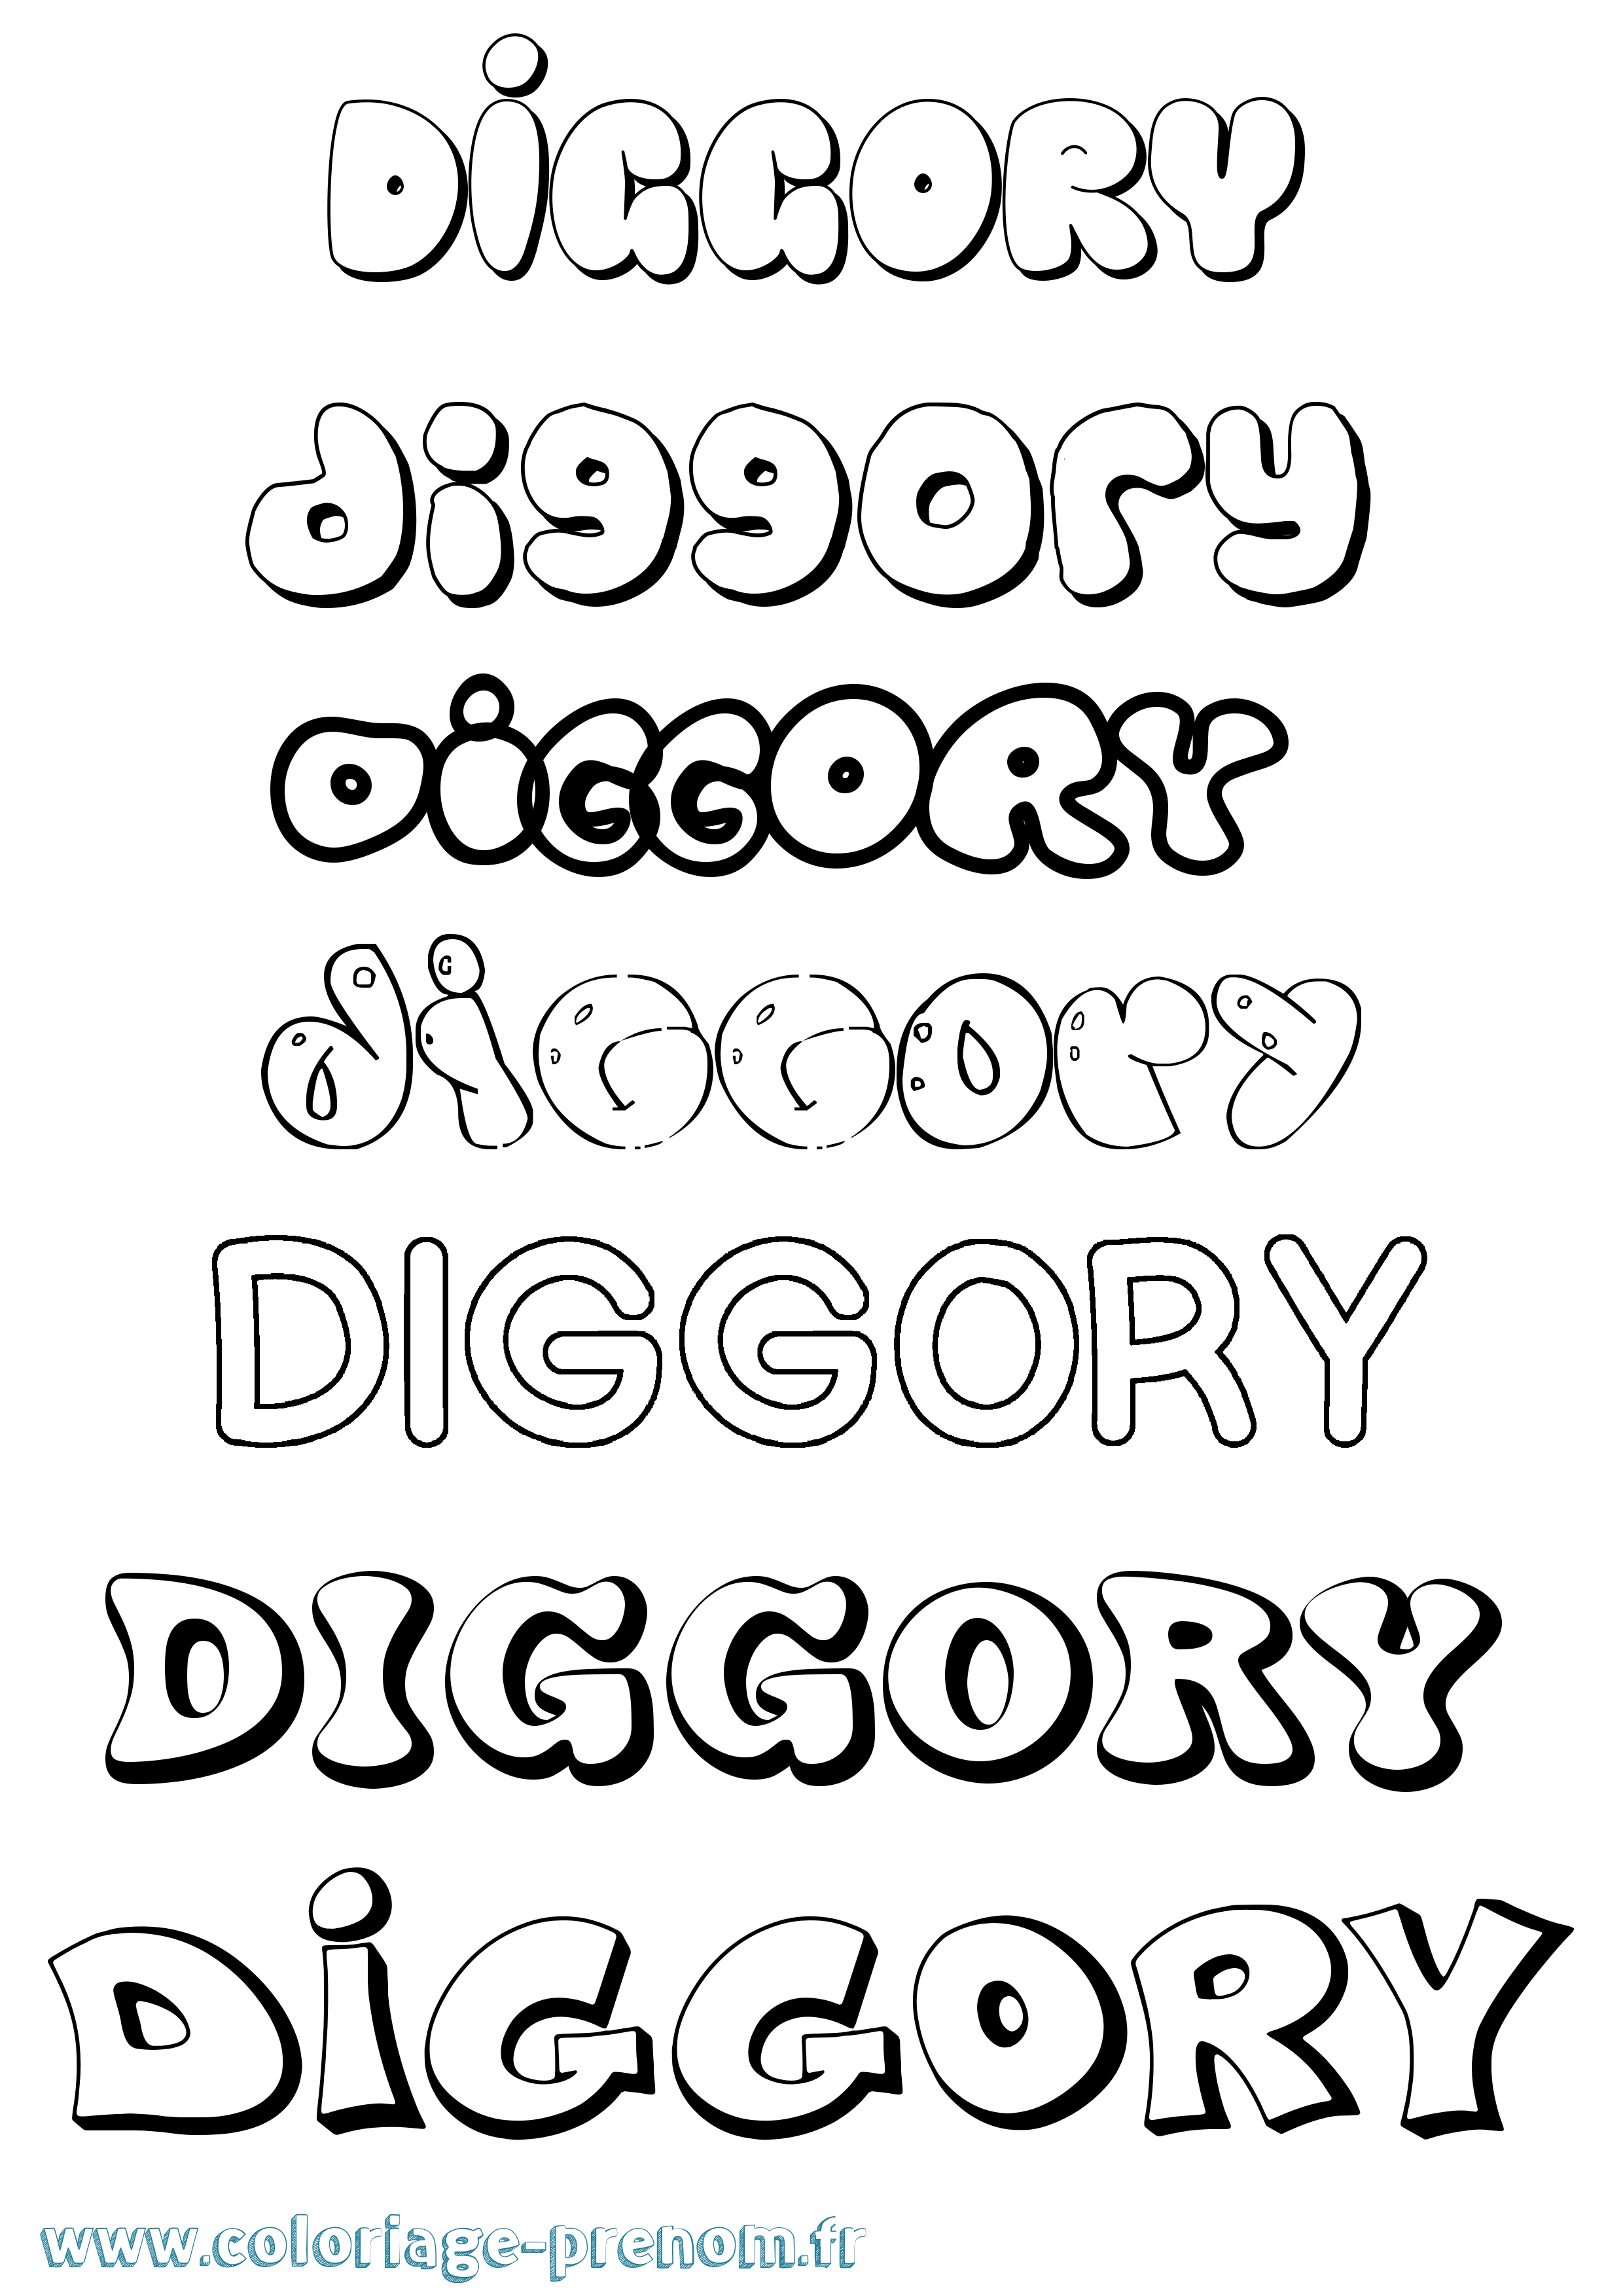 Coloriage prénom Diggory Bubble